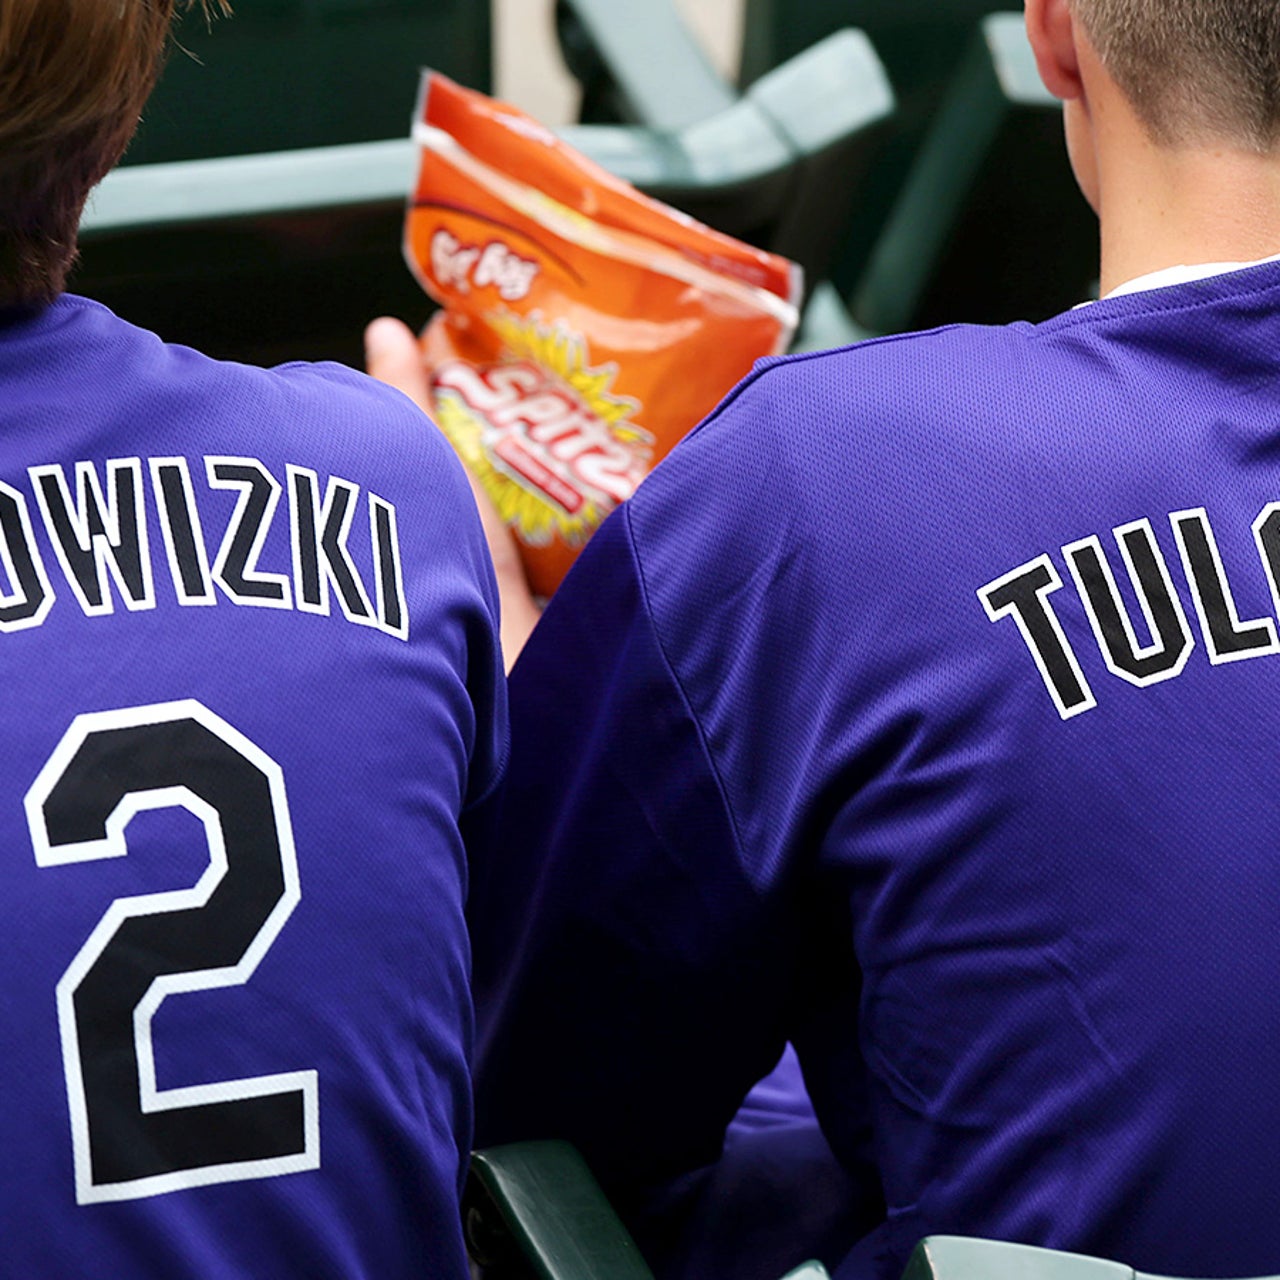 Rockies misspell Tulowitzki's name on giveaway jersey